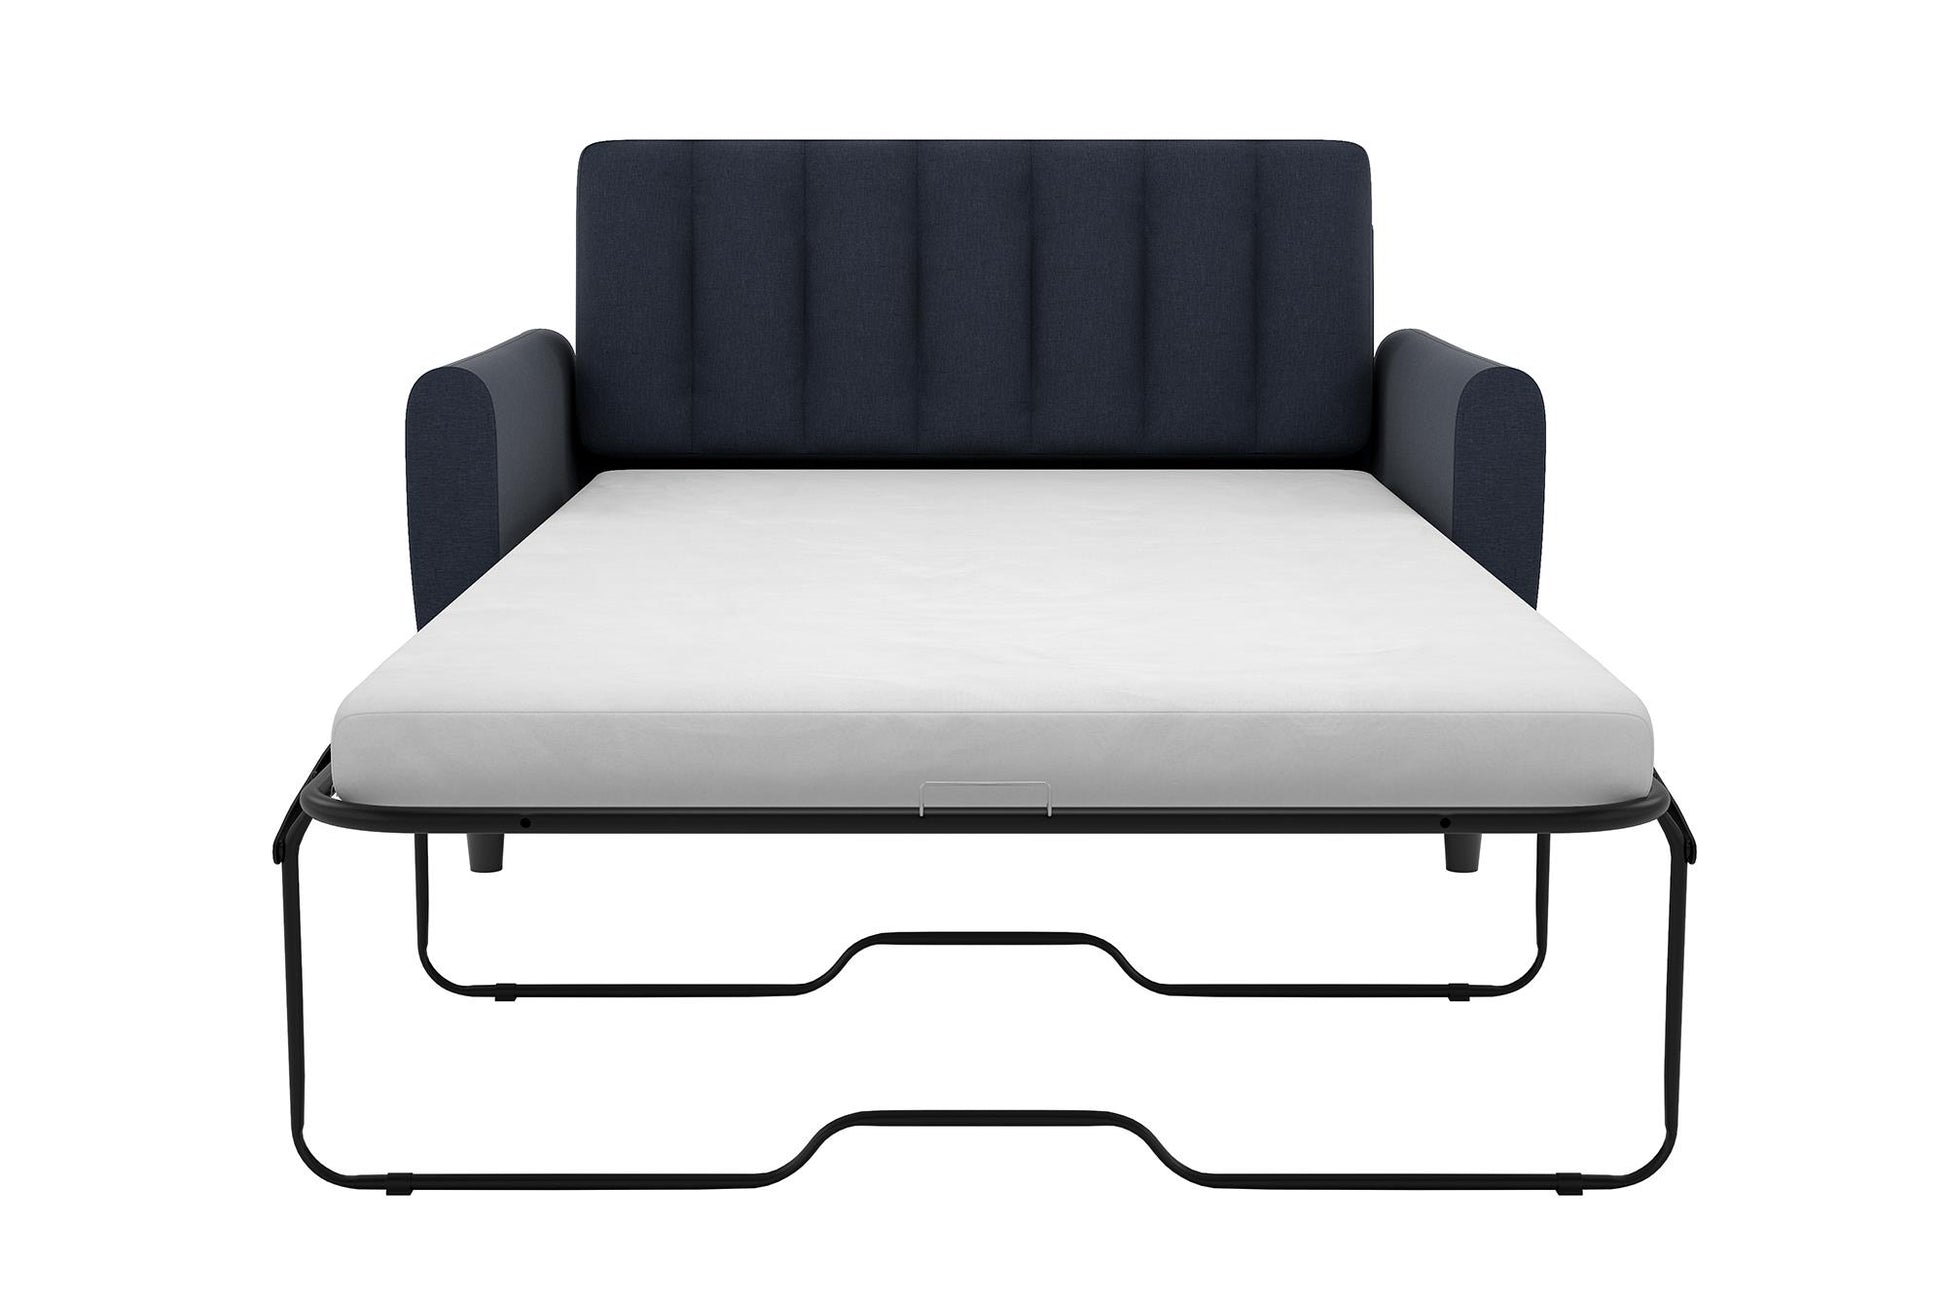 Brittany Loveseat Sleeper Sofa with Memory Foam Mattress - Blue Linen - Twin